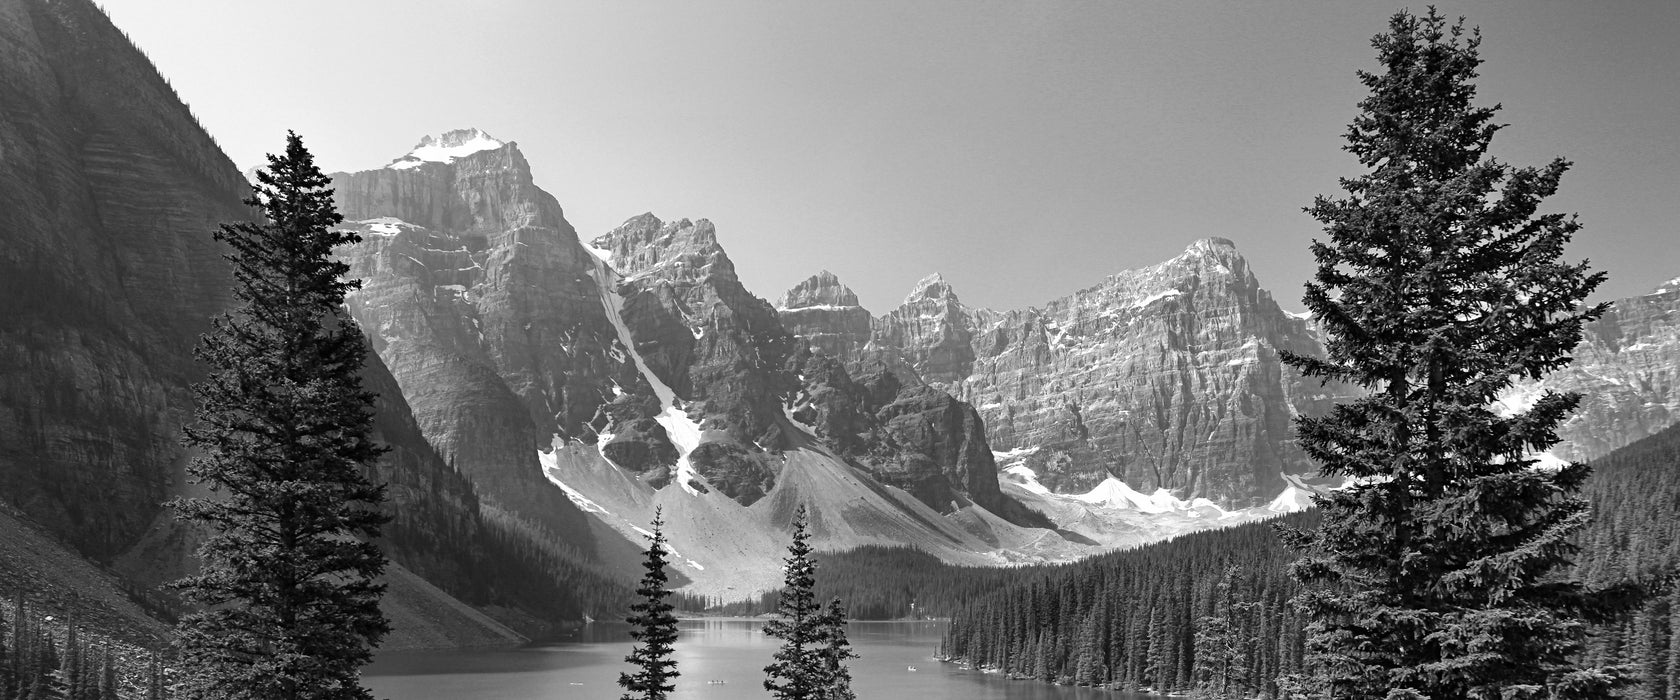 Moraine Lake kanadische Berge, Glasbild Panorama